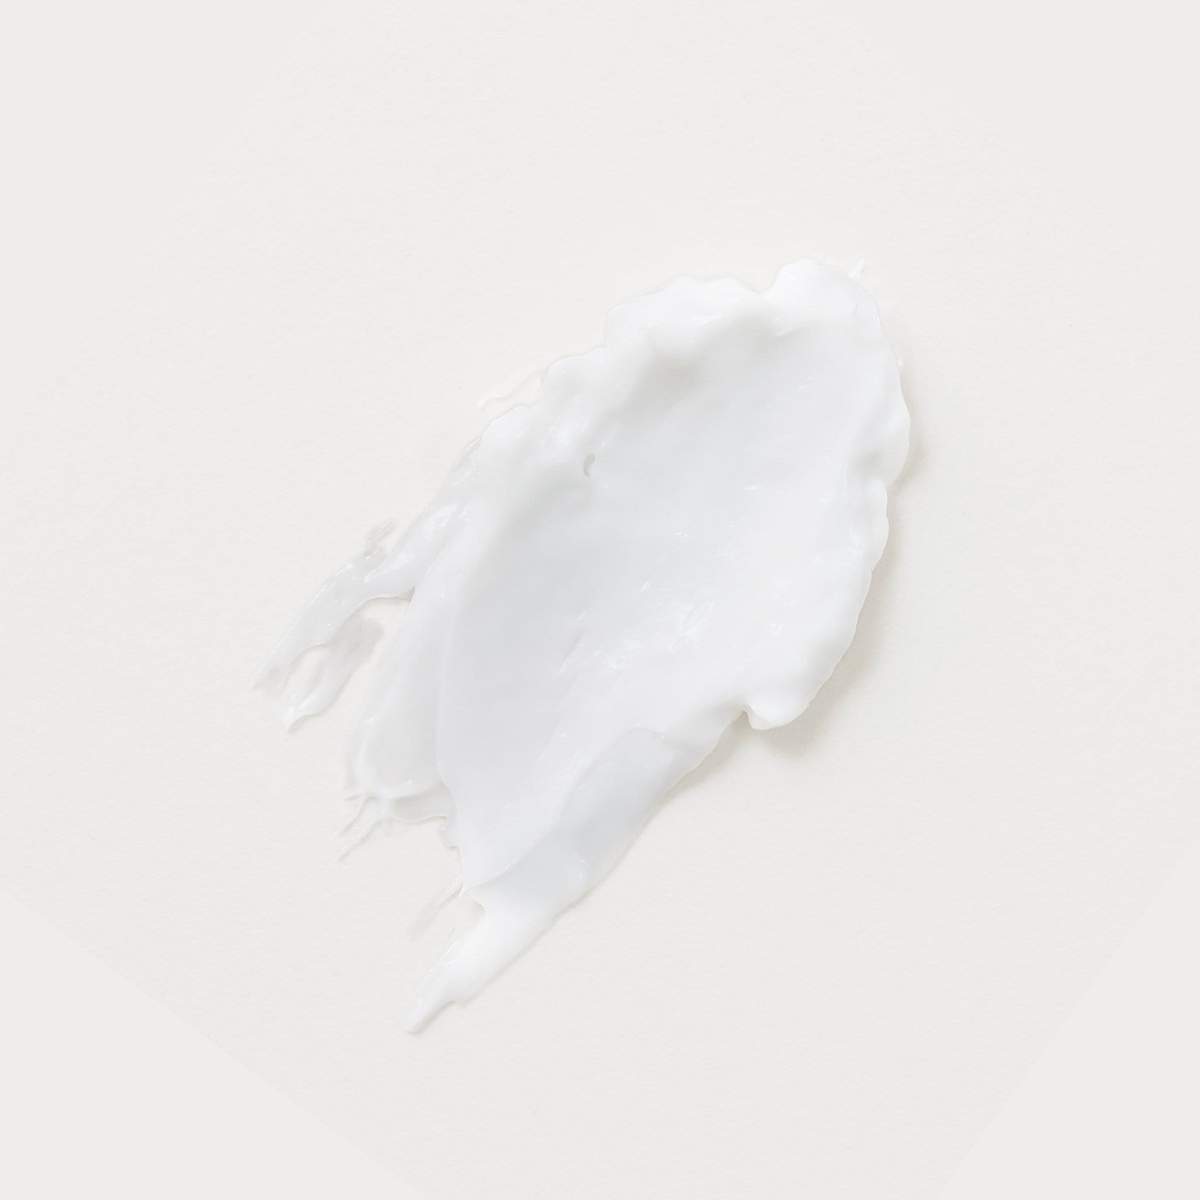 Photo of Увлажняющий крем для лица Pure Cloud Cream